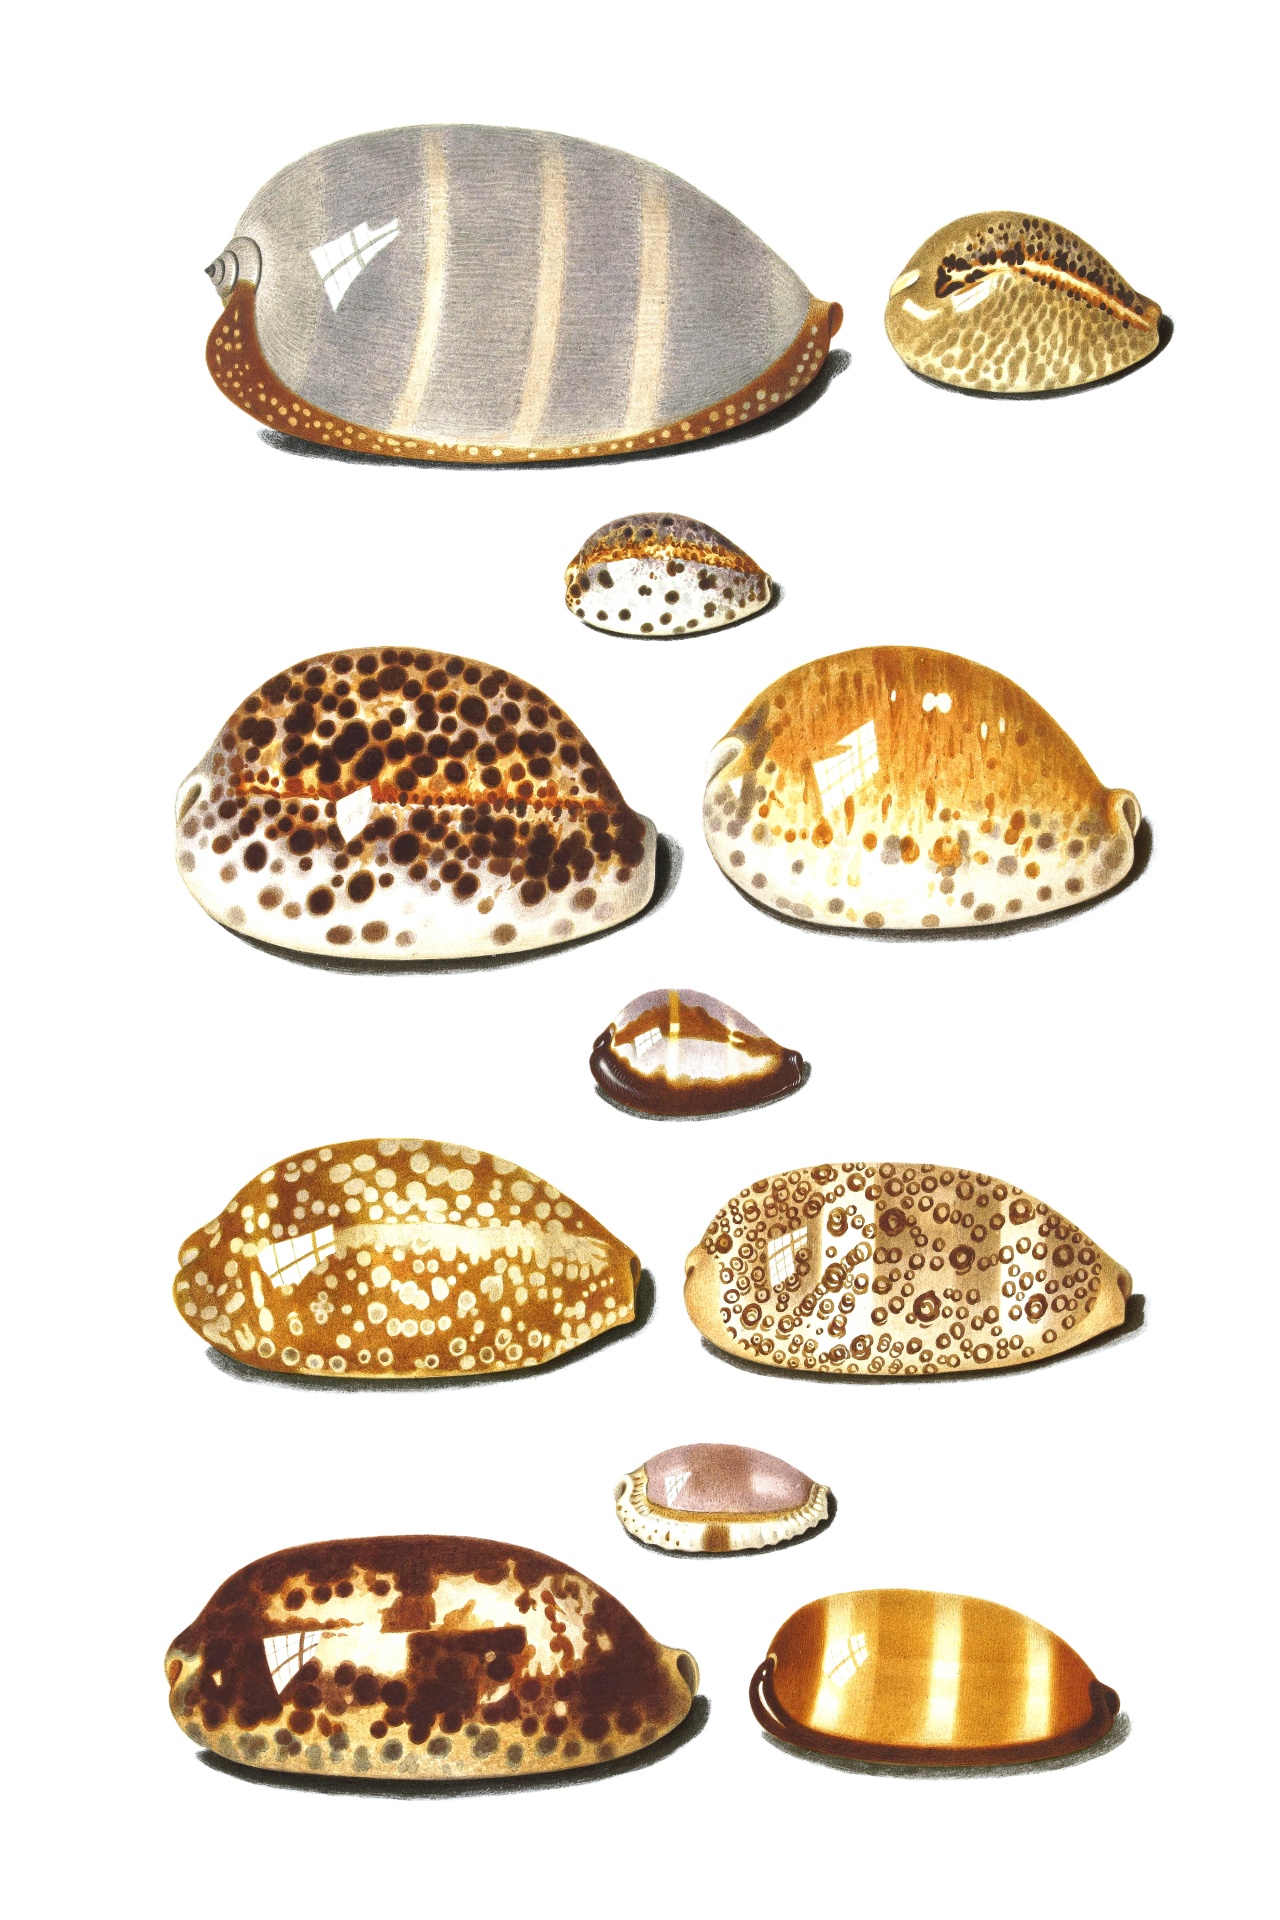 Seashells mediterranean snails vintage art old antique illustration